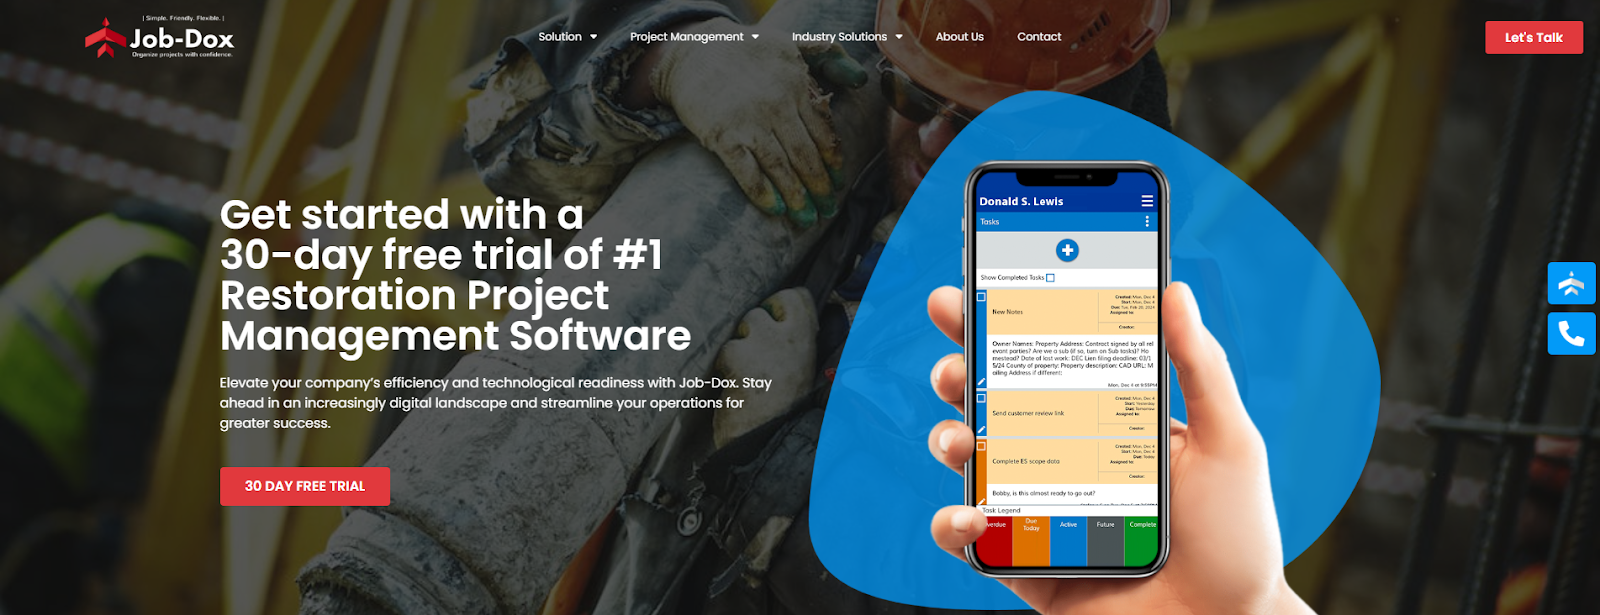 Website of Job-Dox, a restoration project management software